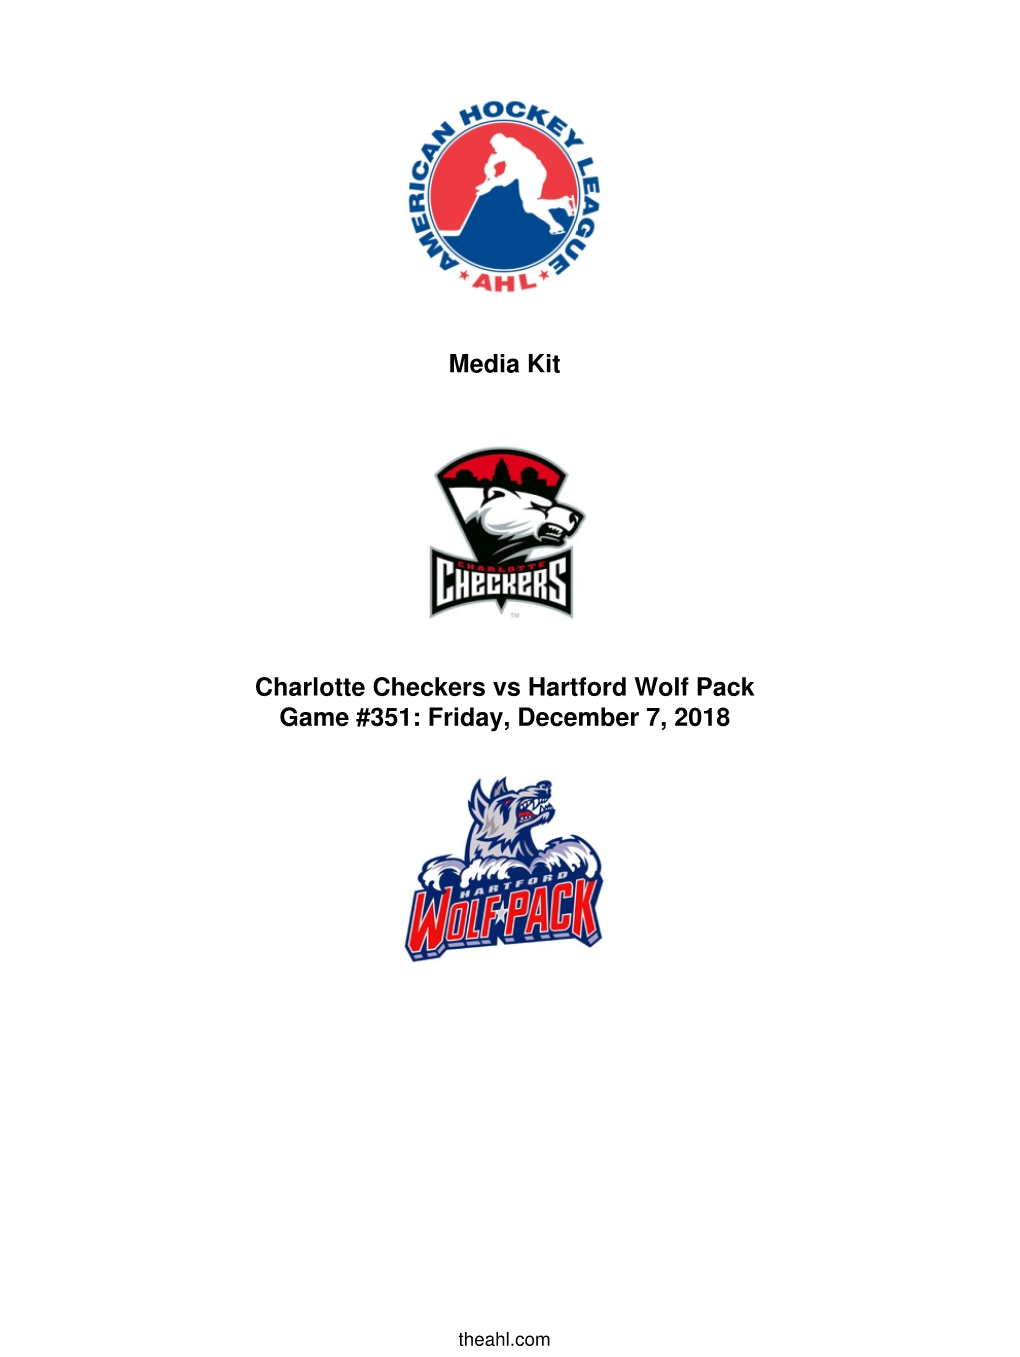 Media Kit Charlotte Checkers Vs Hartford Wolf Pack Game #351